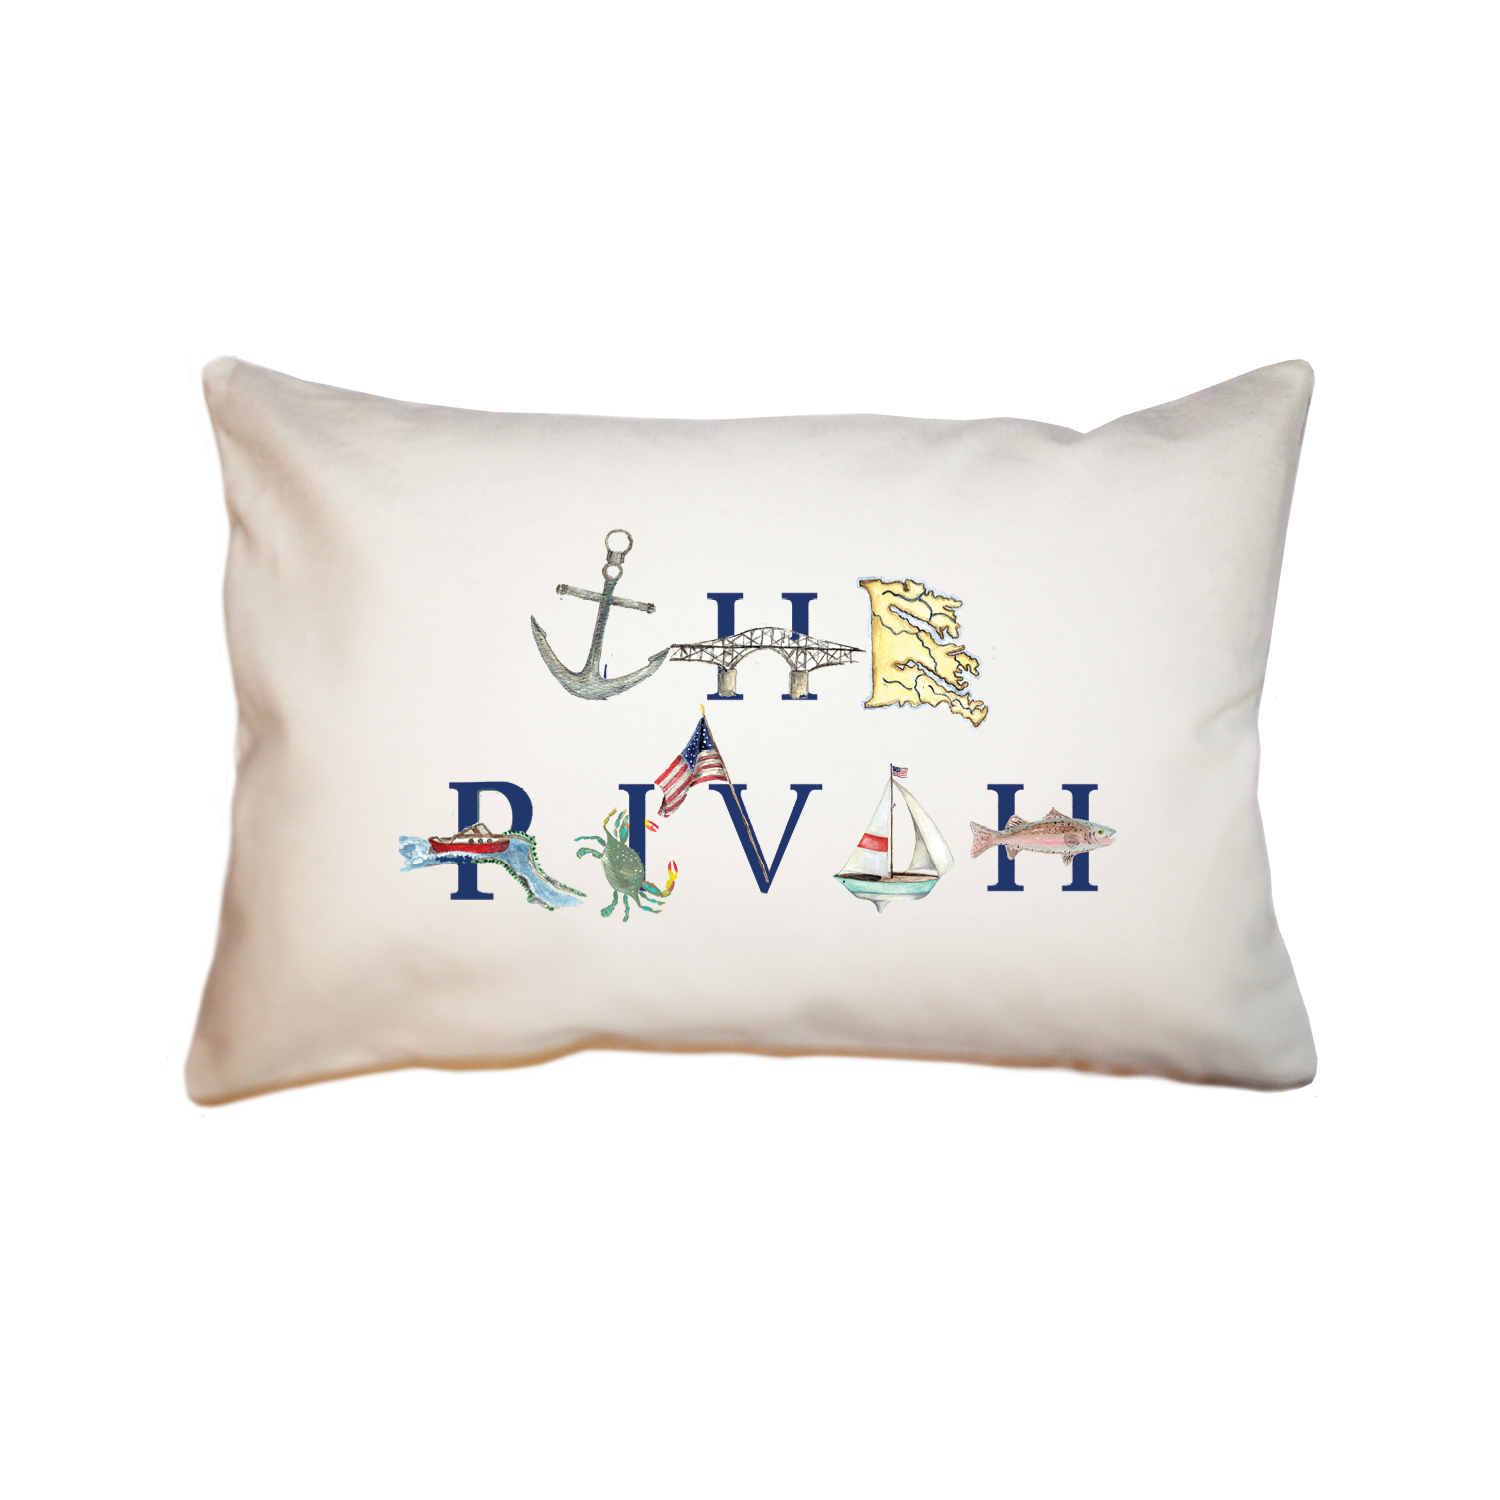 The Rivah large rectangle pillow